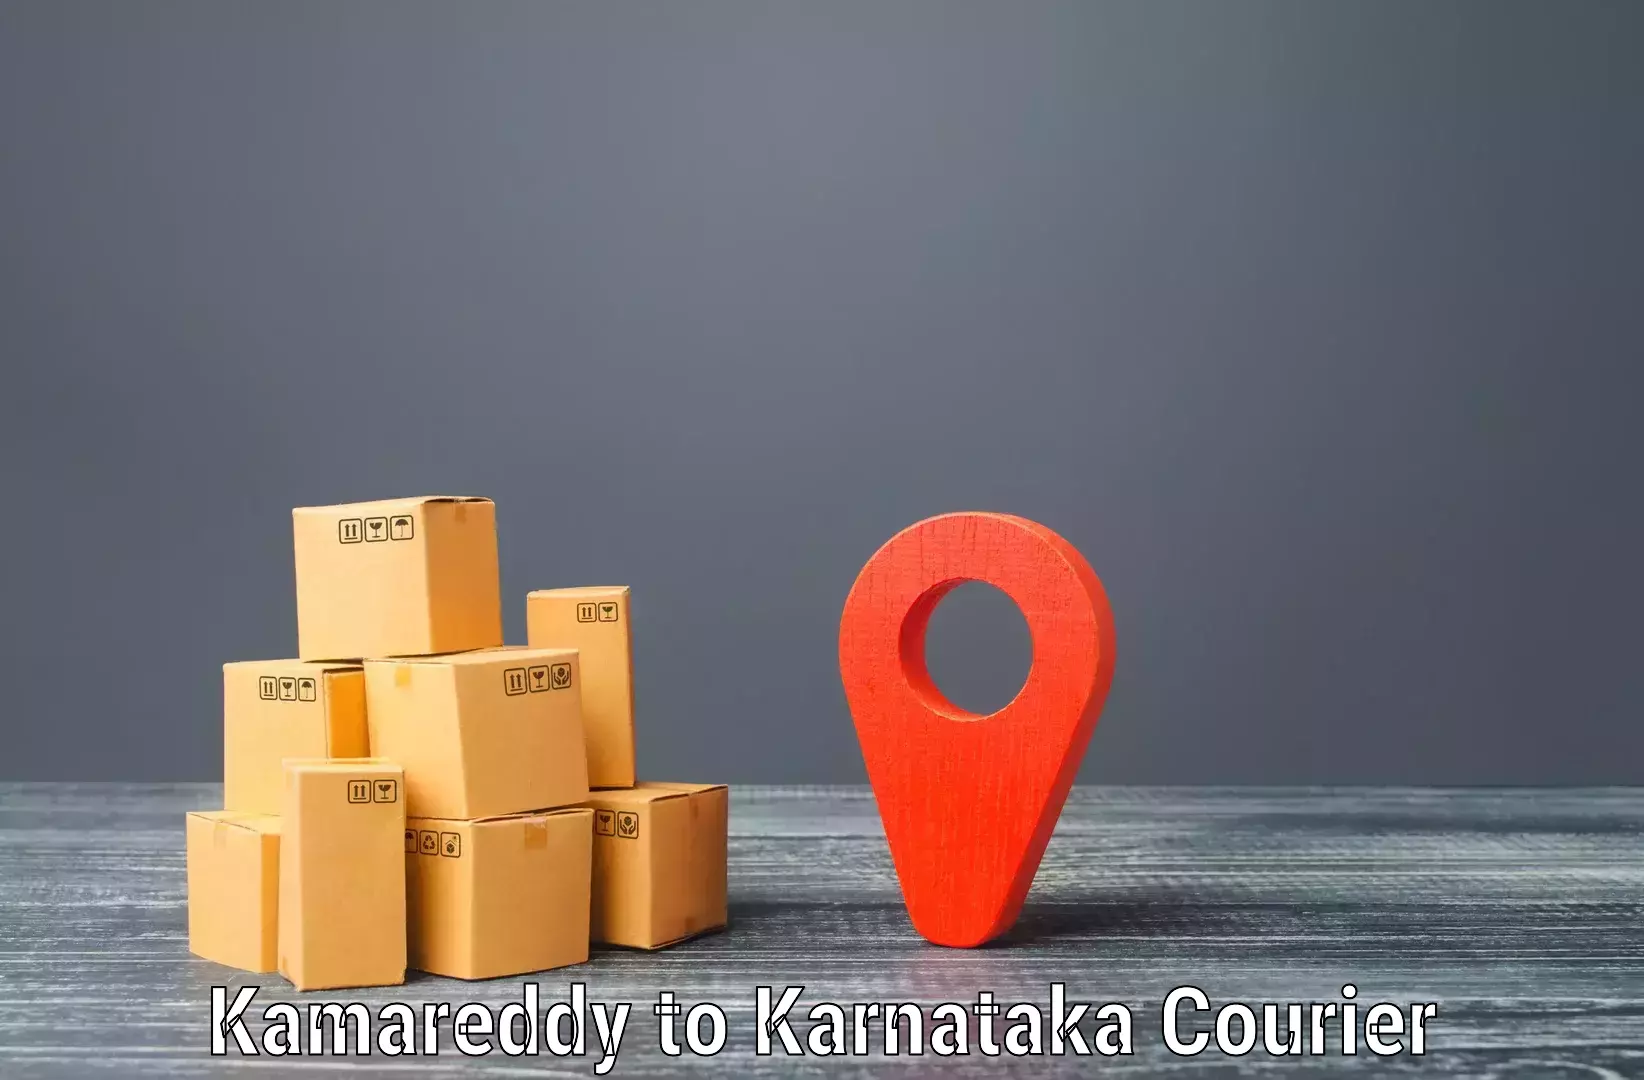 Modern delivery technologies Kamareddy to Byadagi